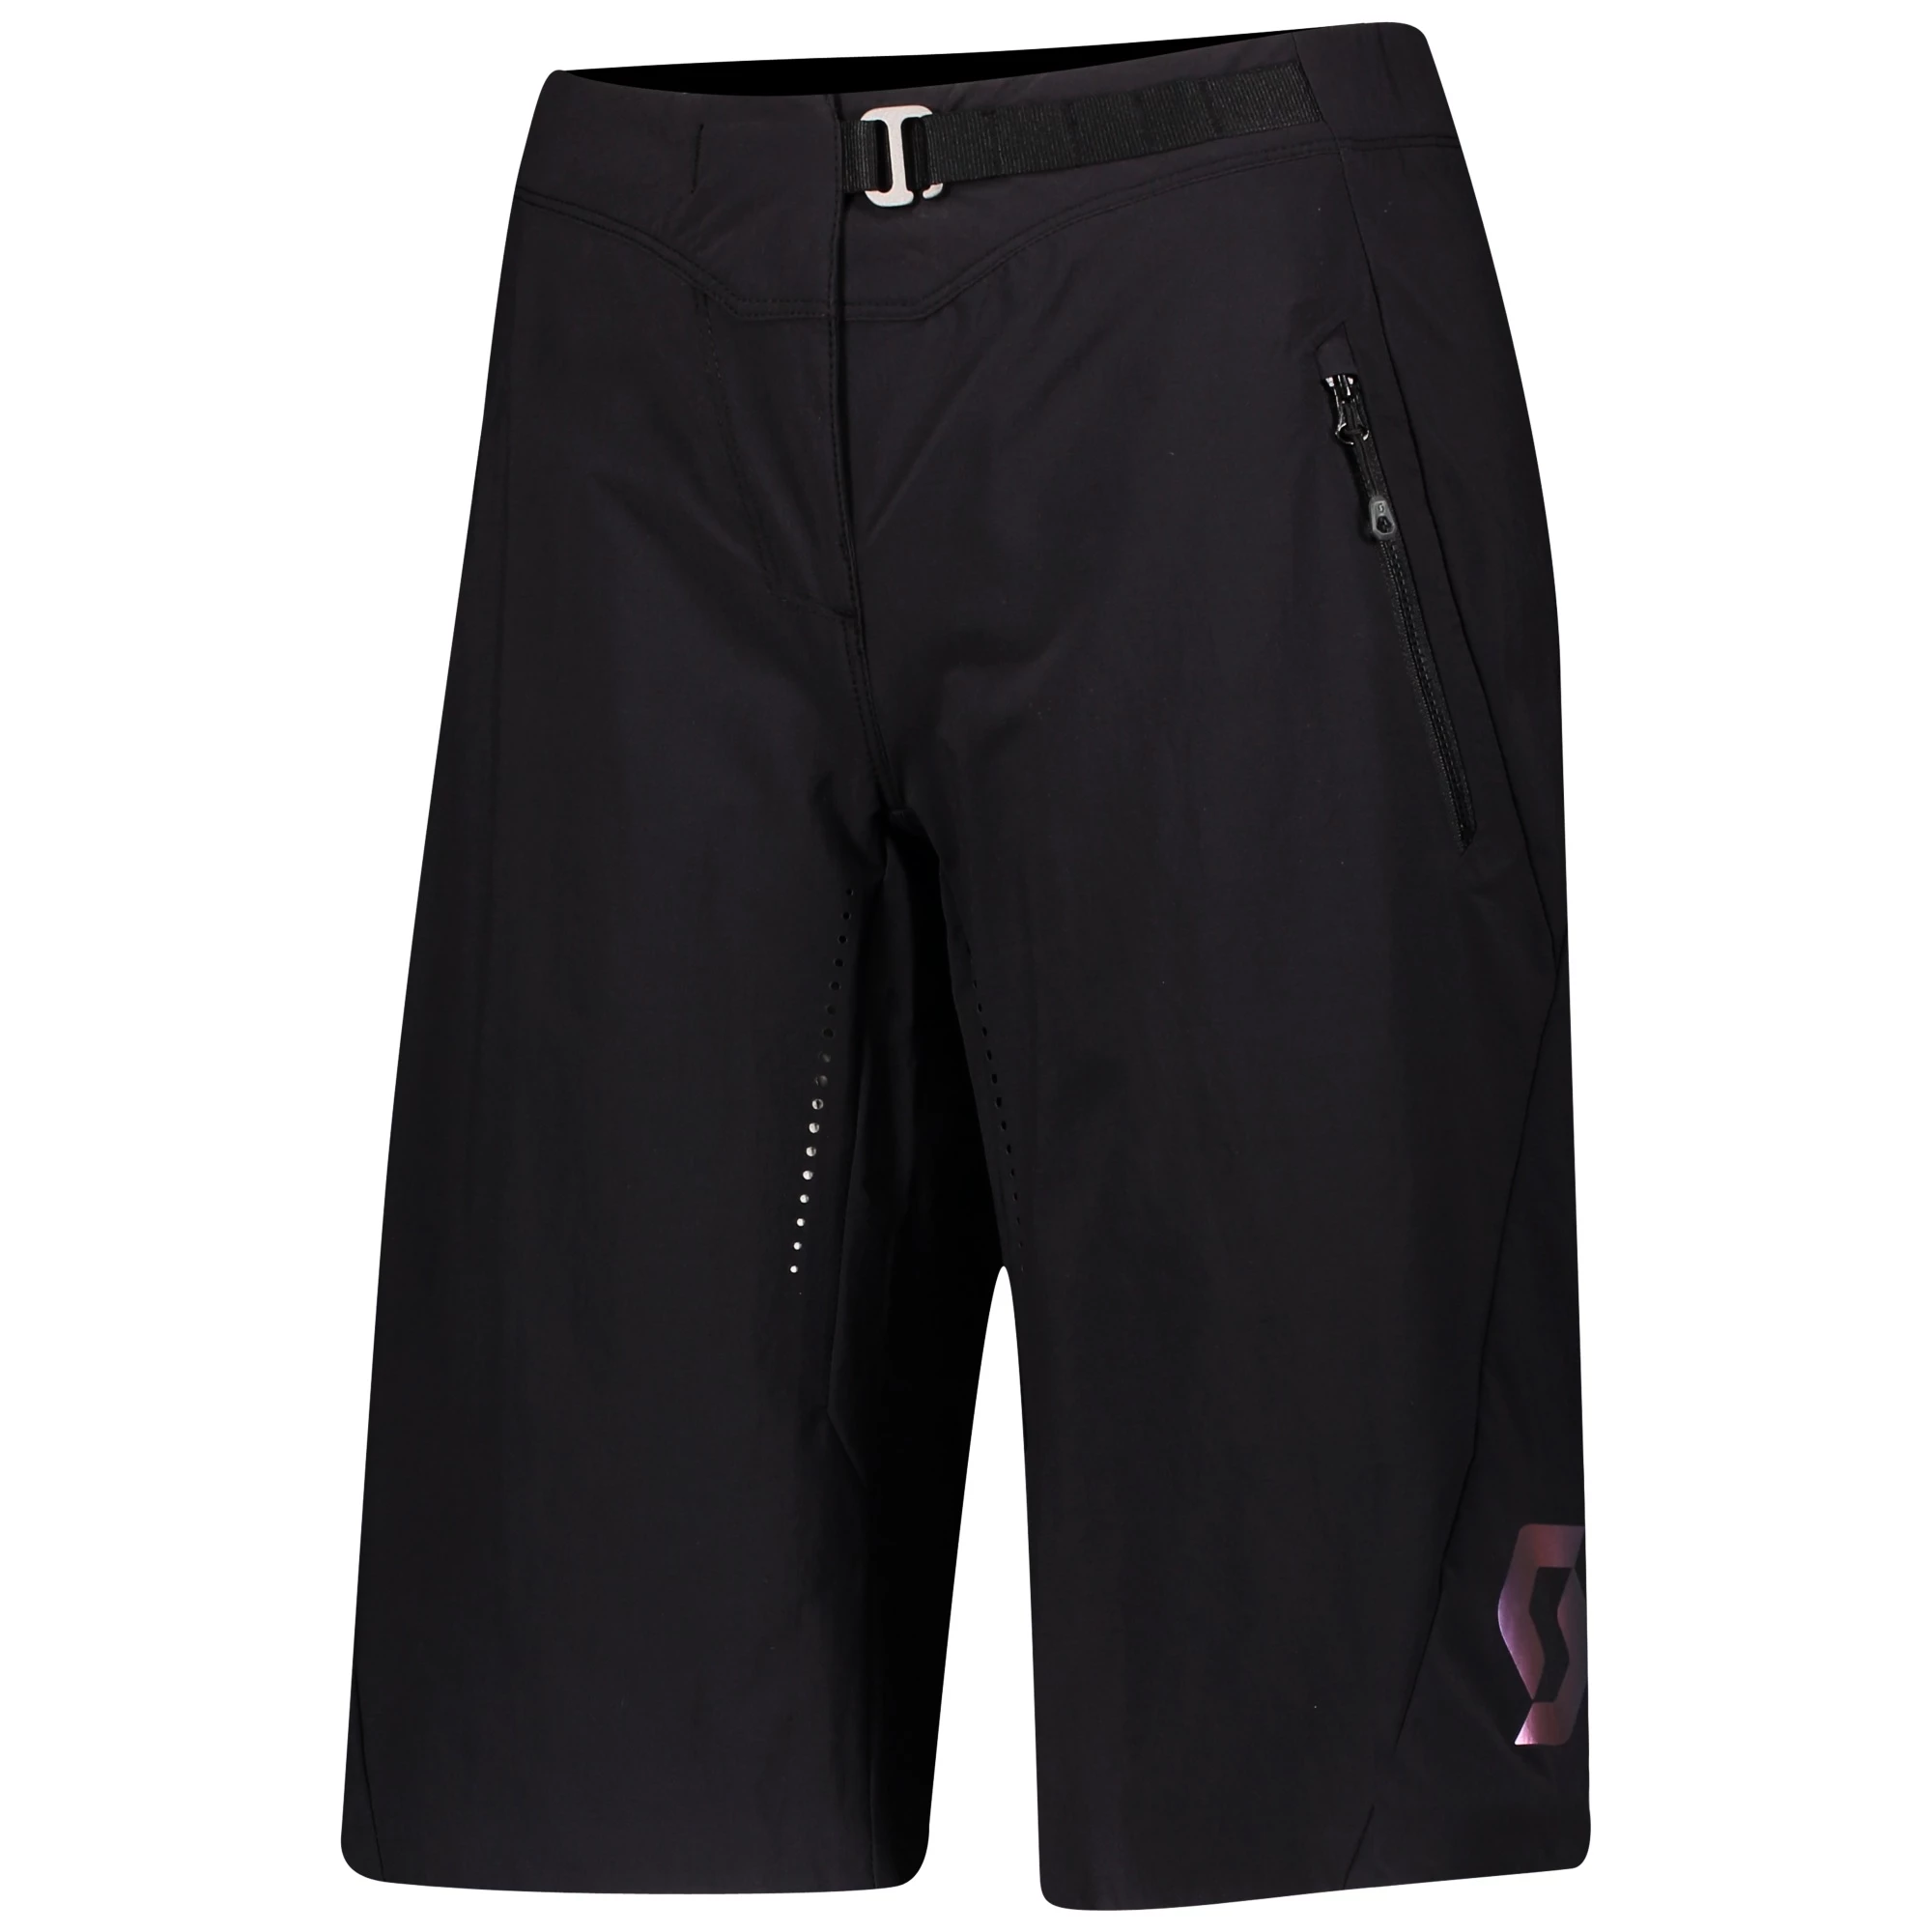 Scott Trail Contessa Sign w/Pad Black/Nitro Purple Women's Bib Shorts